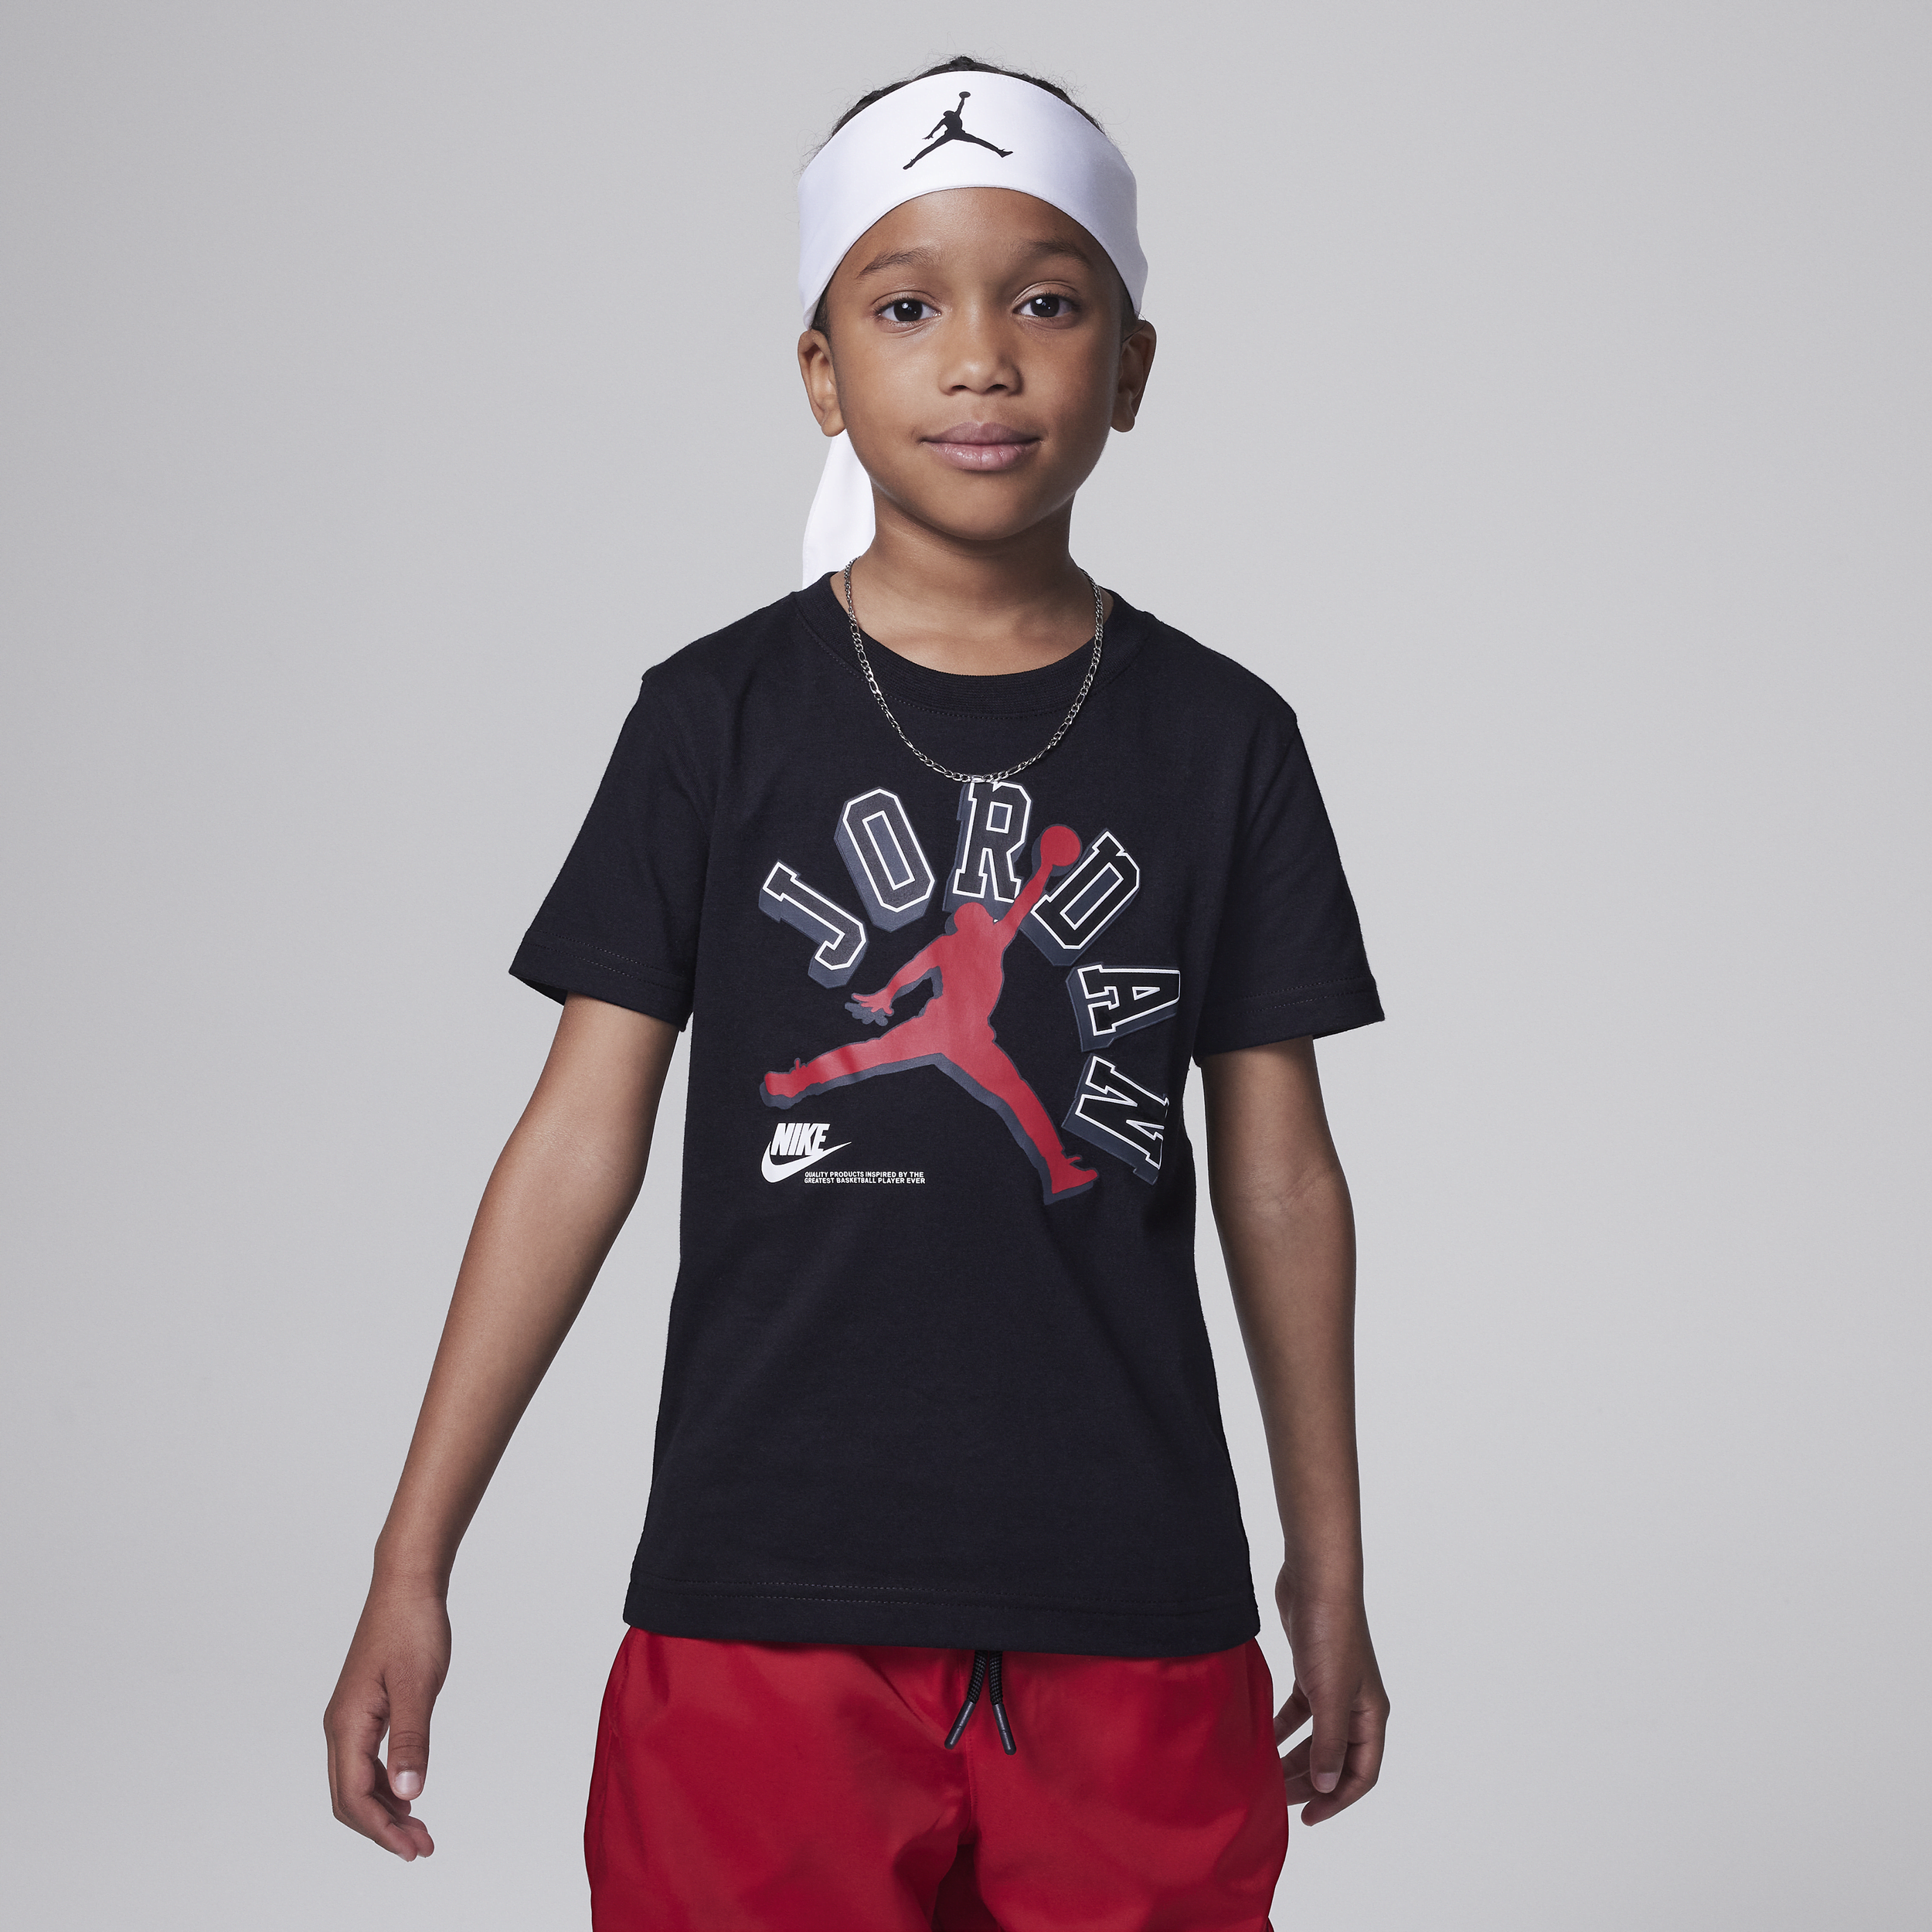 Jordan Varsity Jumpman Camiseta - Niño/a pequeño/a - Negro